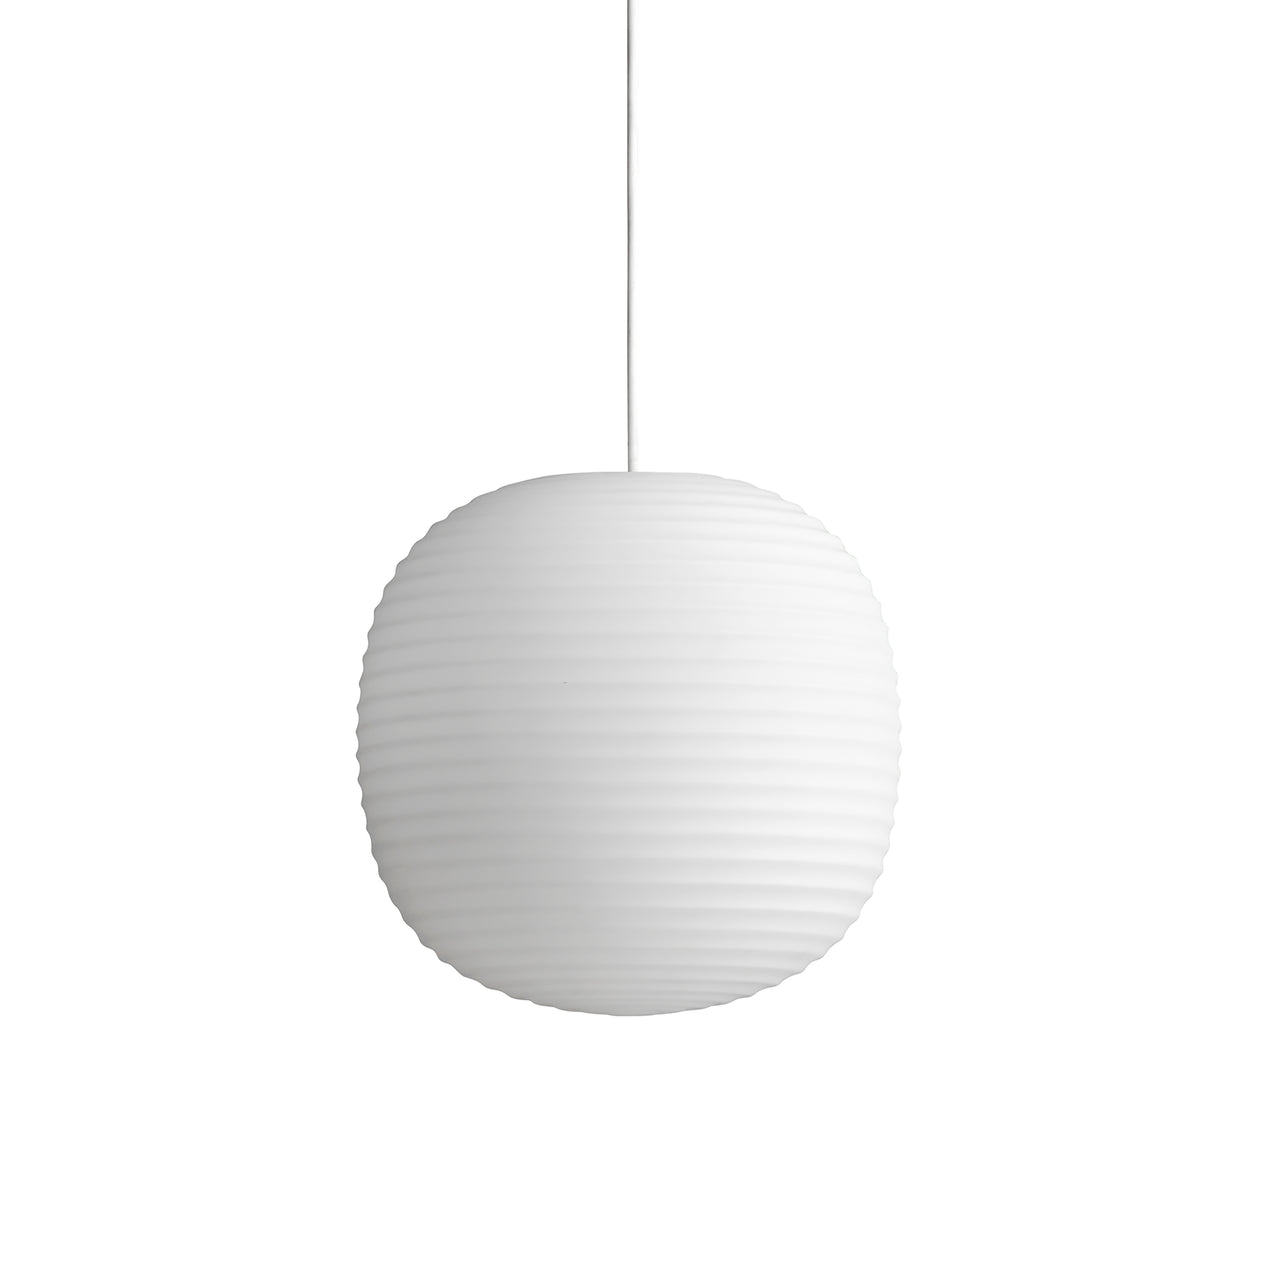 Lantern Pendant Light: Medium - 11.8